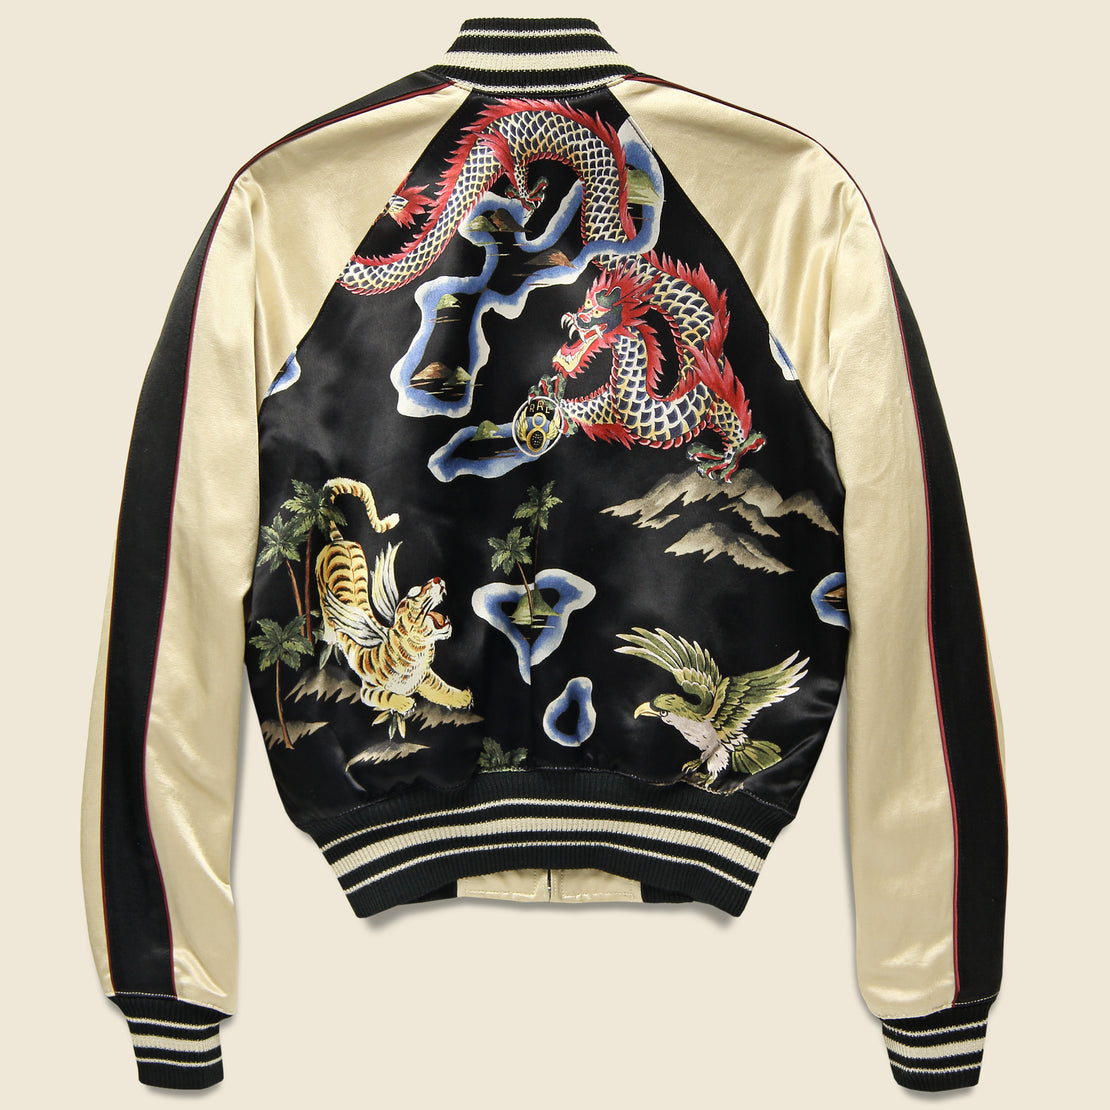 Dragon Print Tour Jacket - Black - RRL - STAG Provisions - W - Outerwear - Coat/Jacket